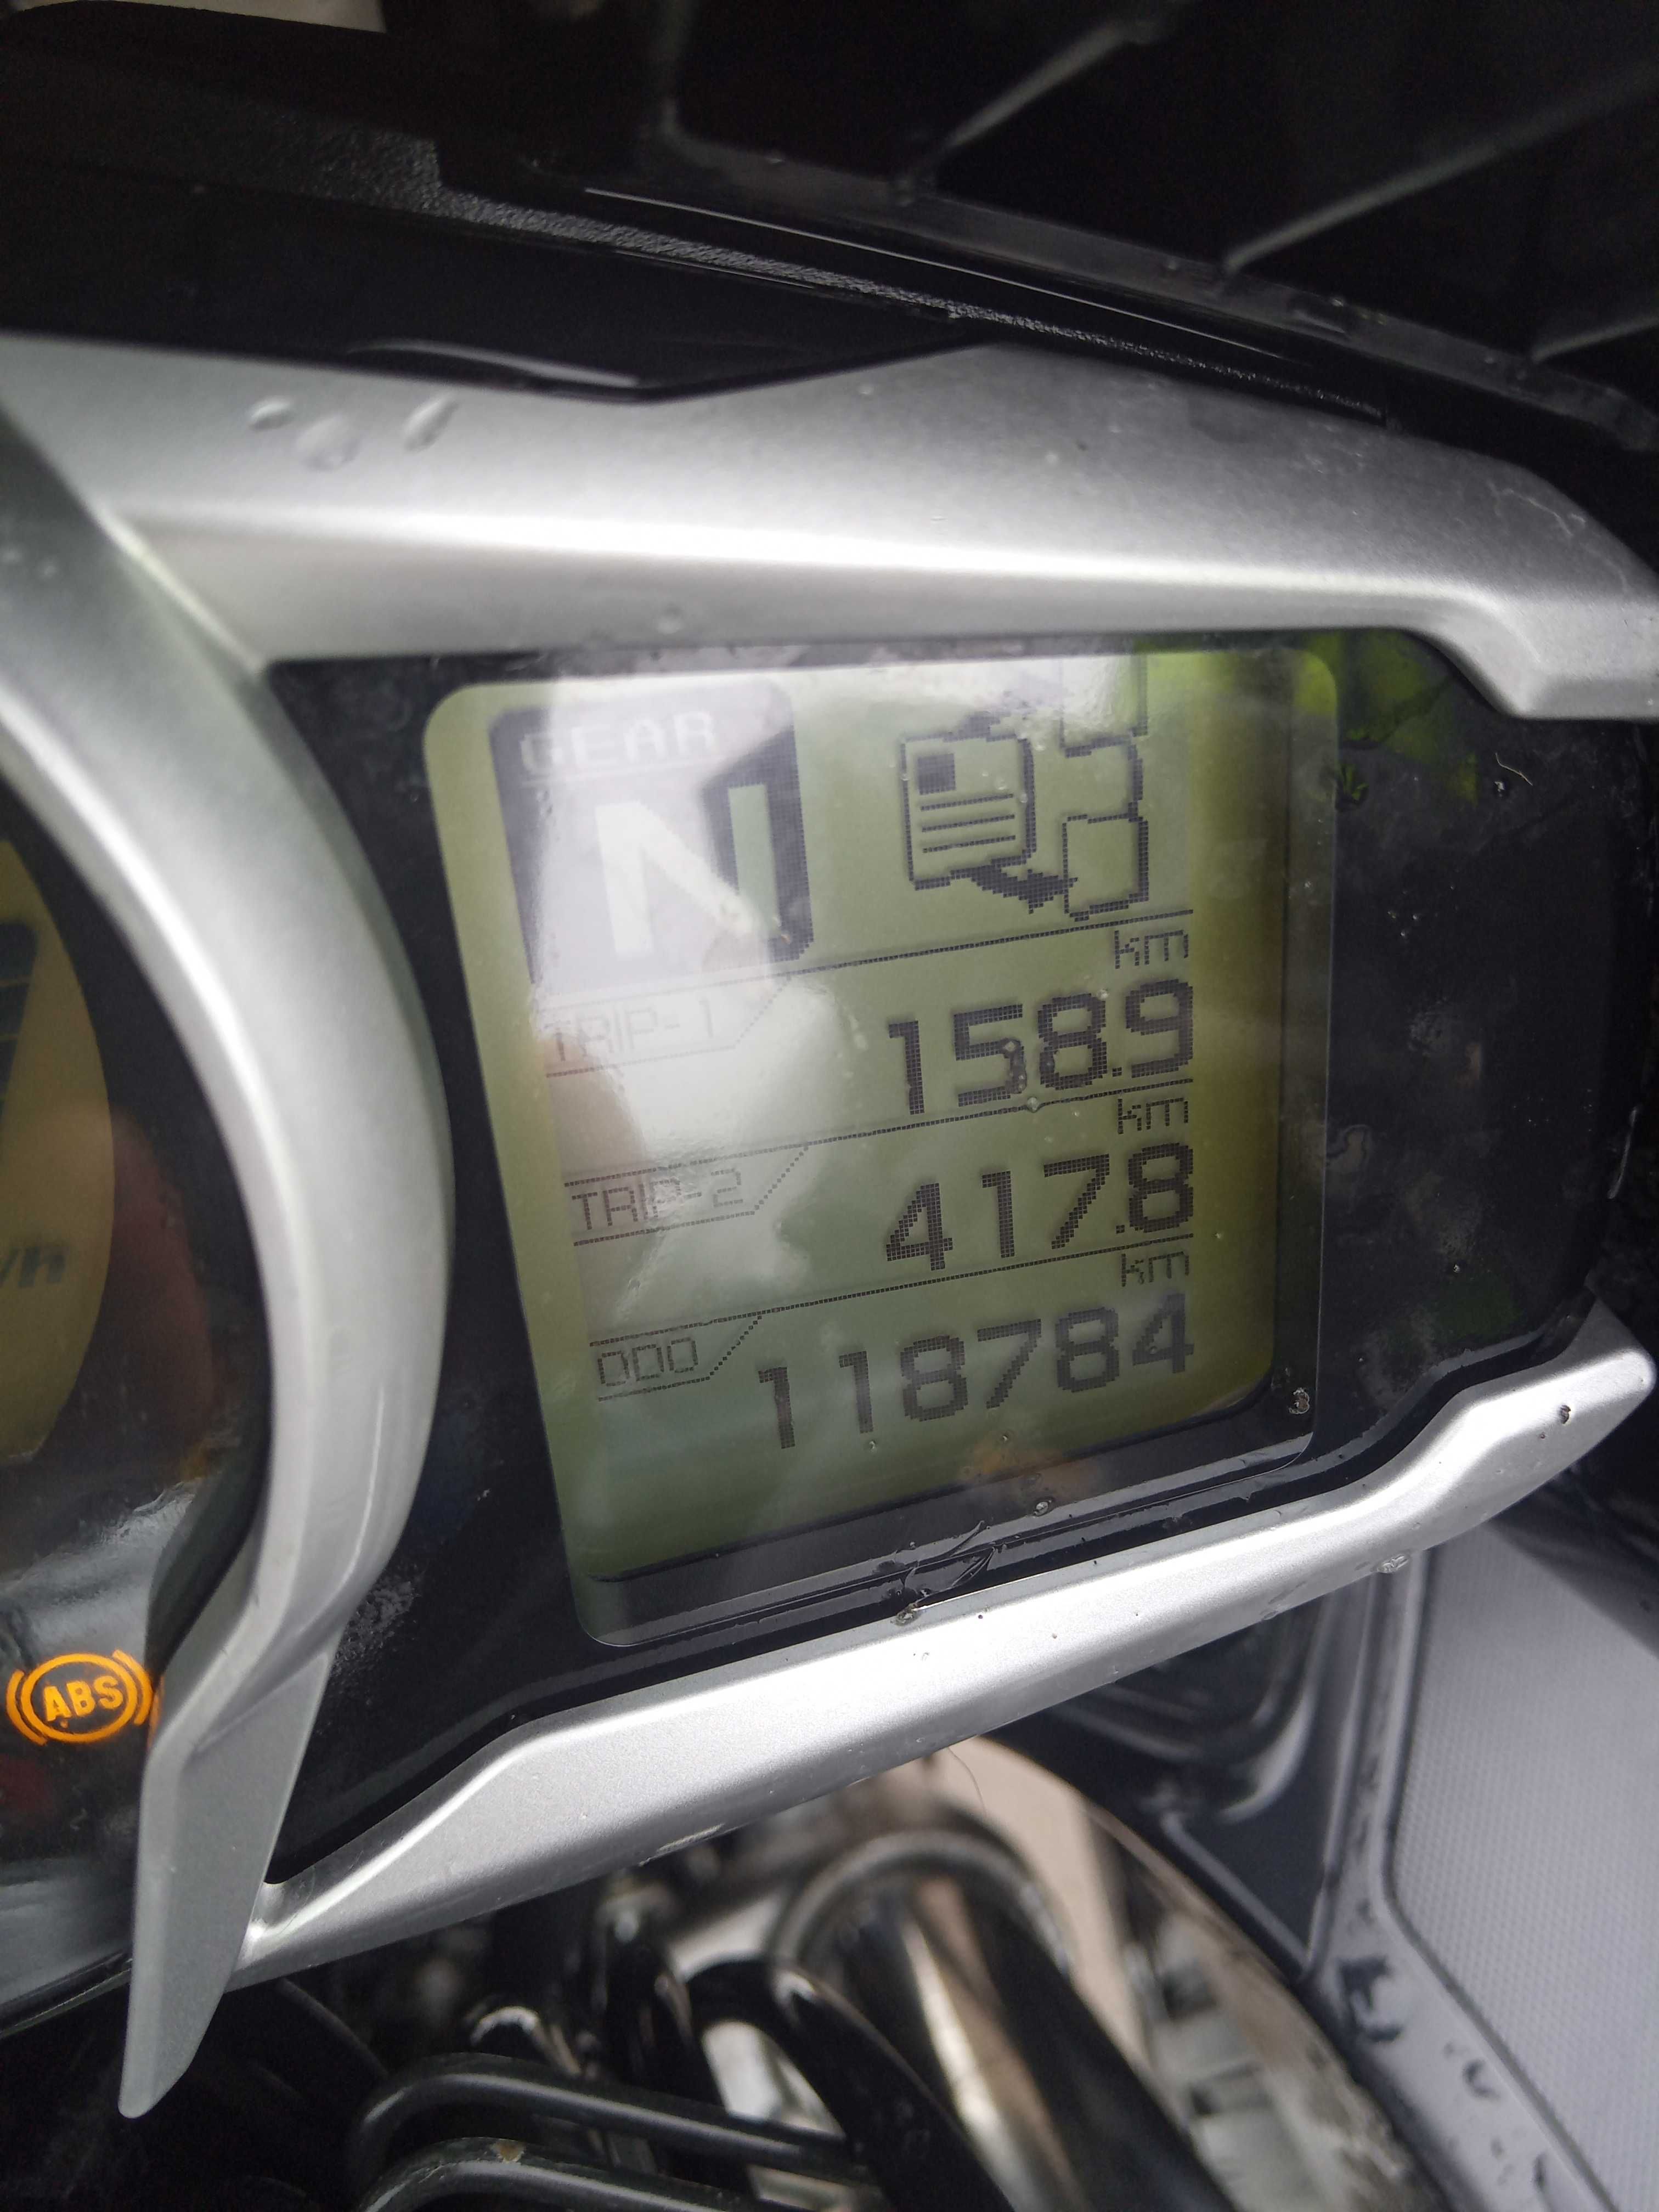 Motocykl Yamaha fjr 1300 nowy model 2014 rok  cbf